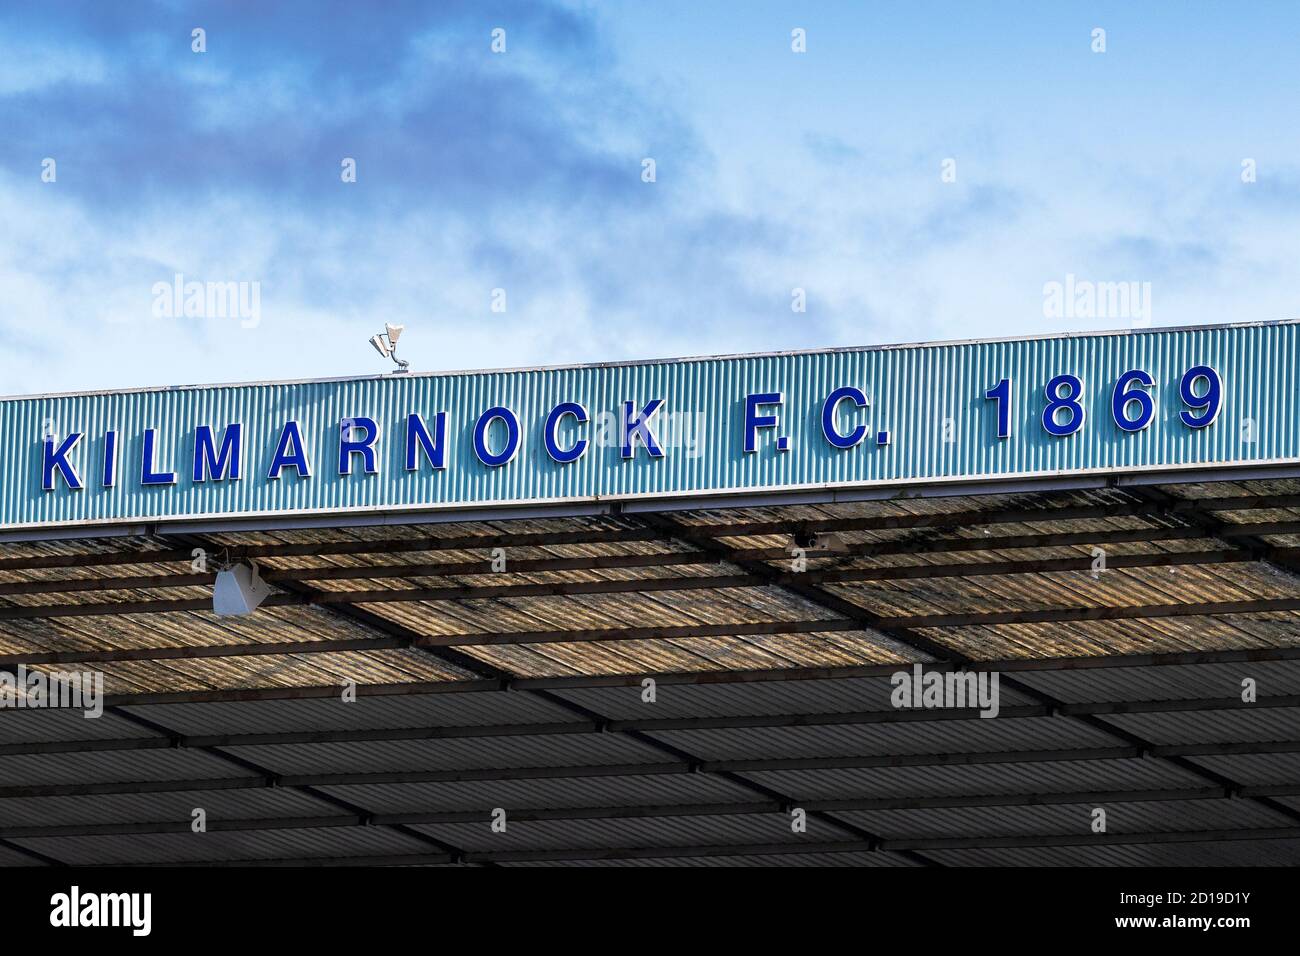 Kilmarnock Football Club name above one of the stadium stands, Rugby Park, Kilmarnock, Ayrshire, Scotland, UK Stock Photo